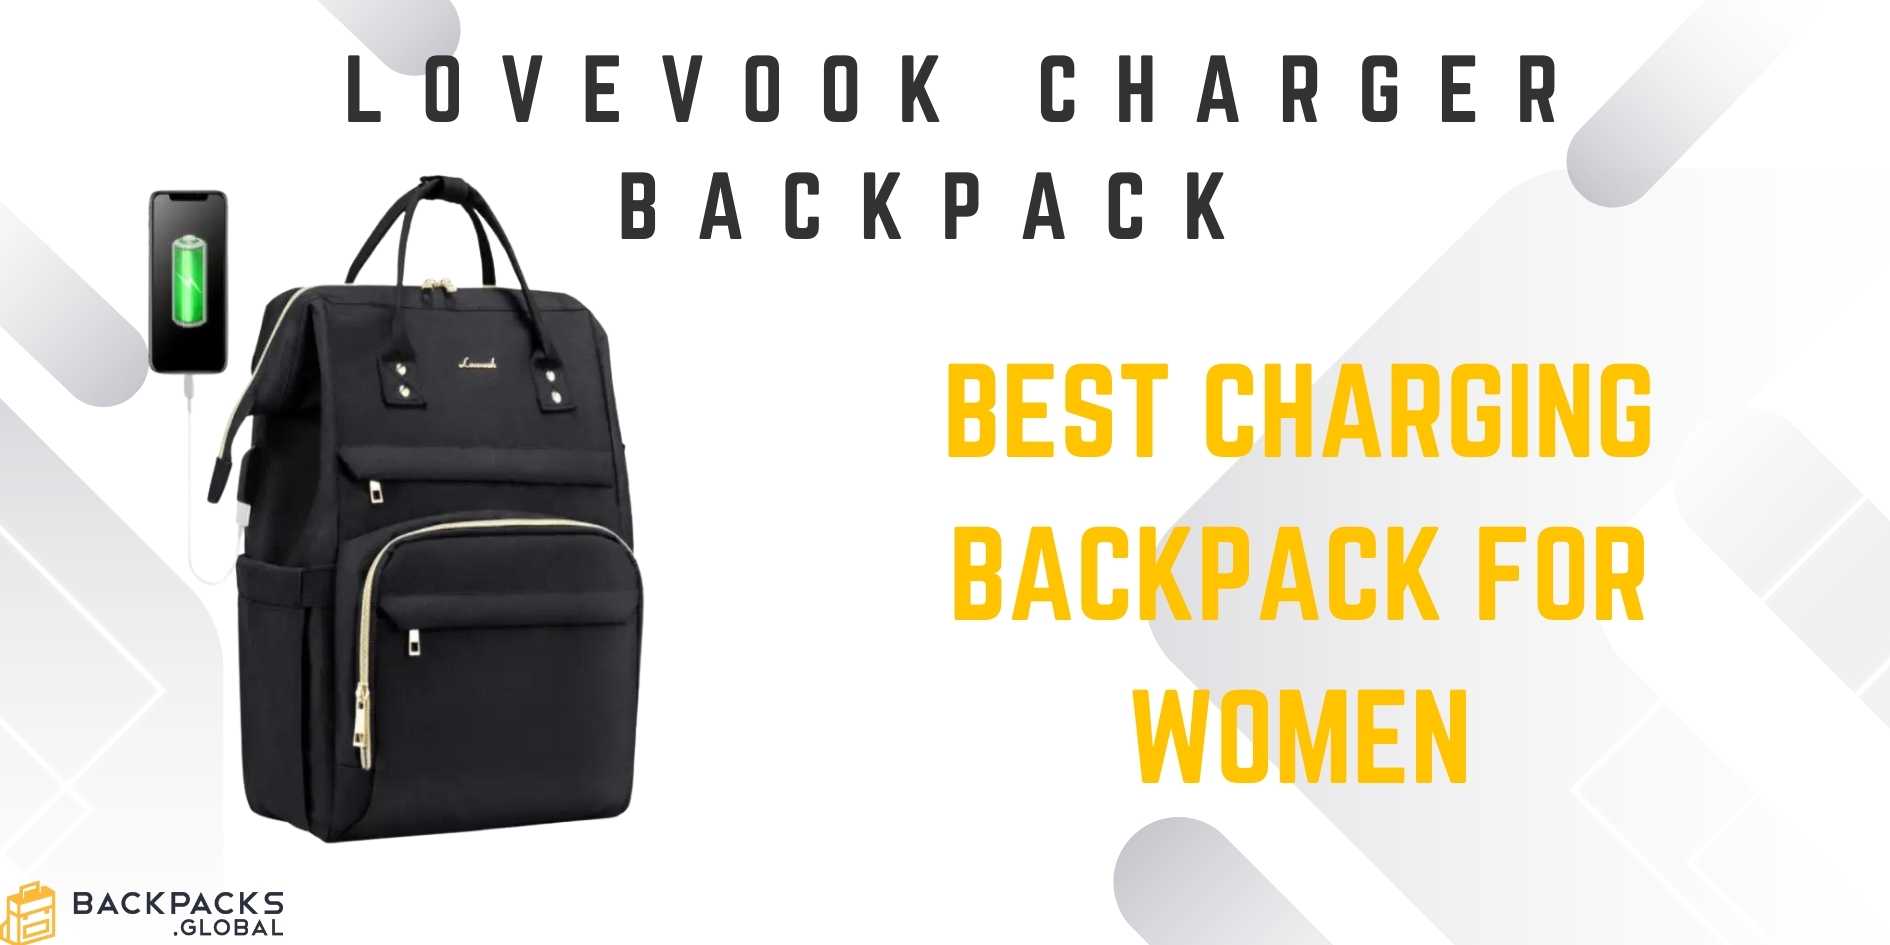 Lovevook 充電器背包